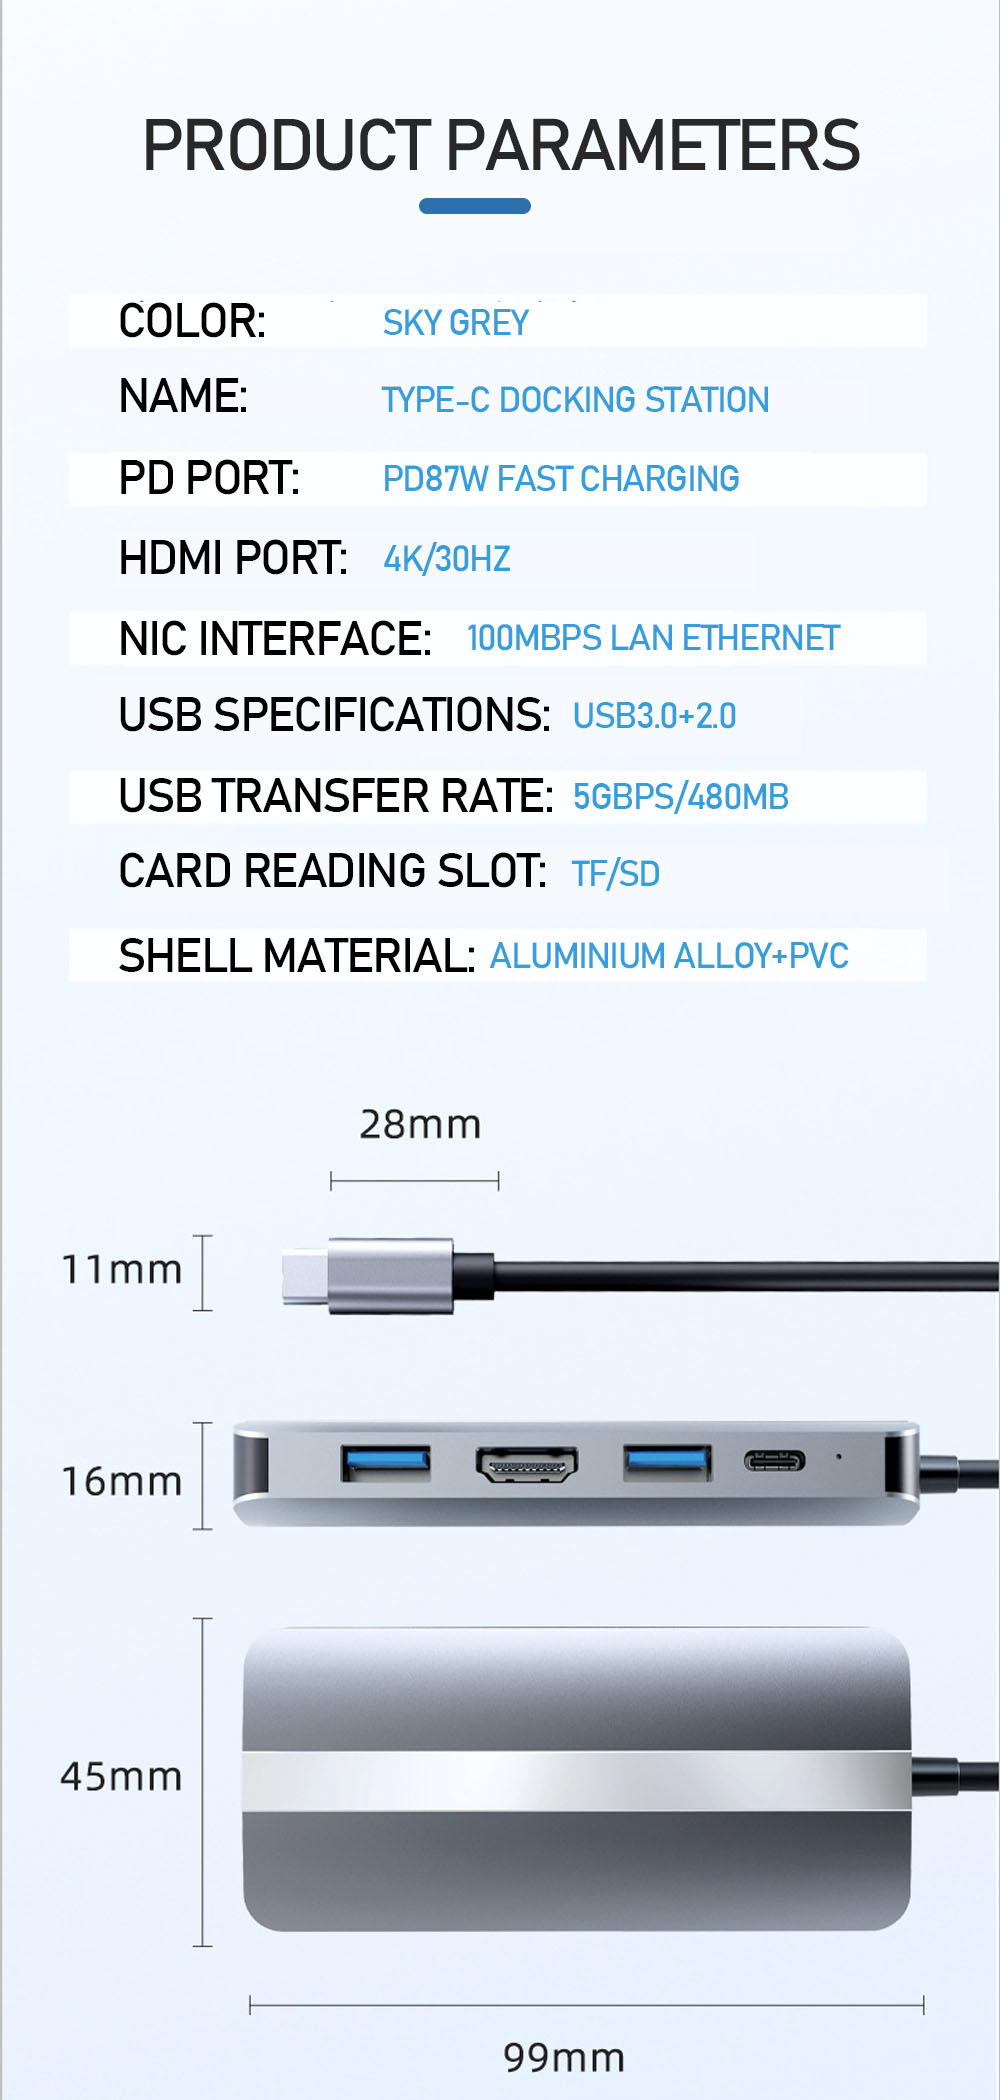 7-in-1-Type-C-Docking-Station-USB-C-Hub-Splitter-Adaptor-with-USB-C-USB30-20-PD-87W-4K30HZ-100Mbps-R-1966598-10